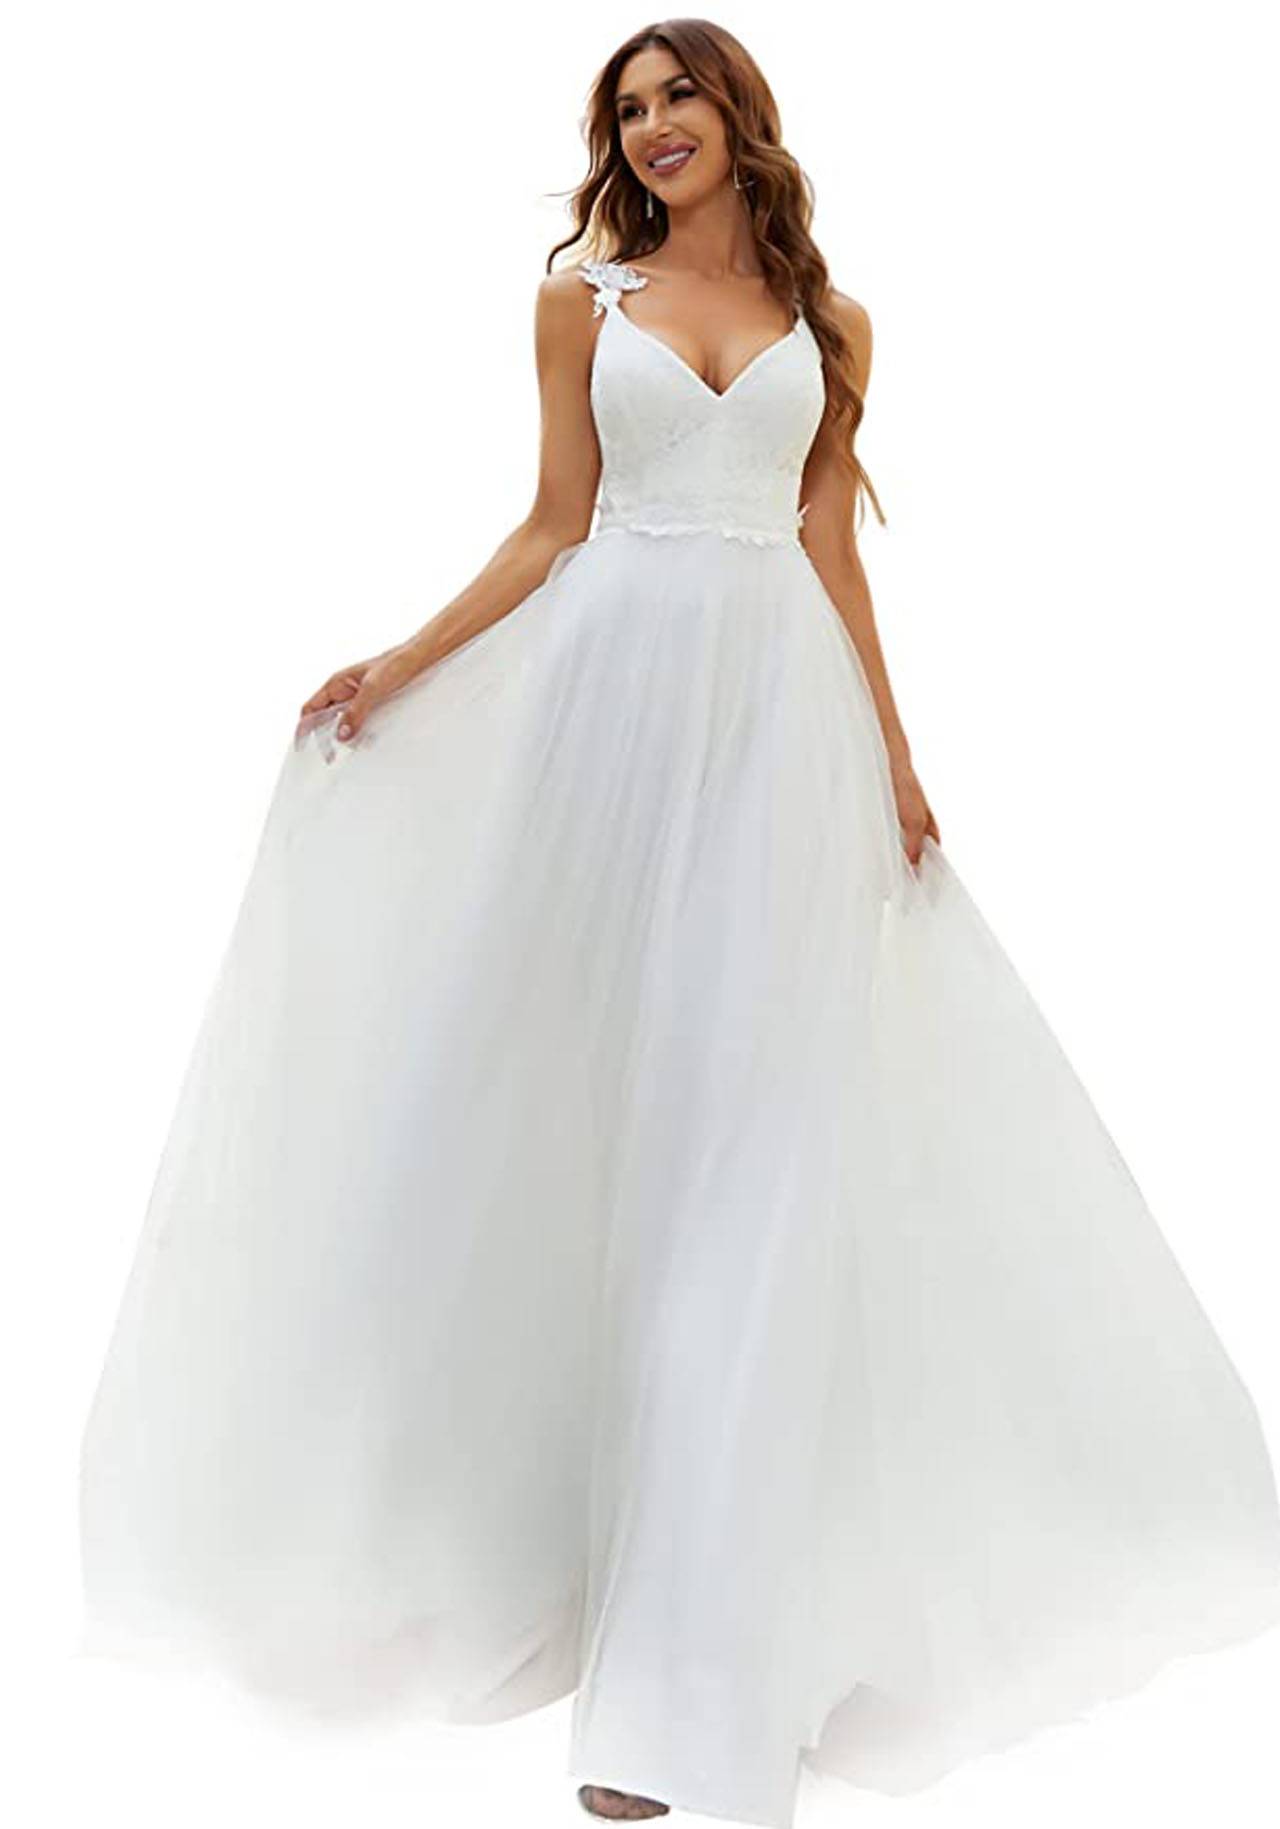 Vestidos de novia para boda civil: Con encajes de Amazon